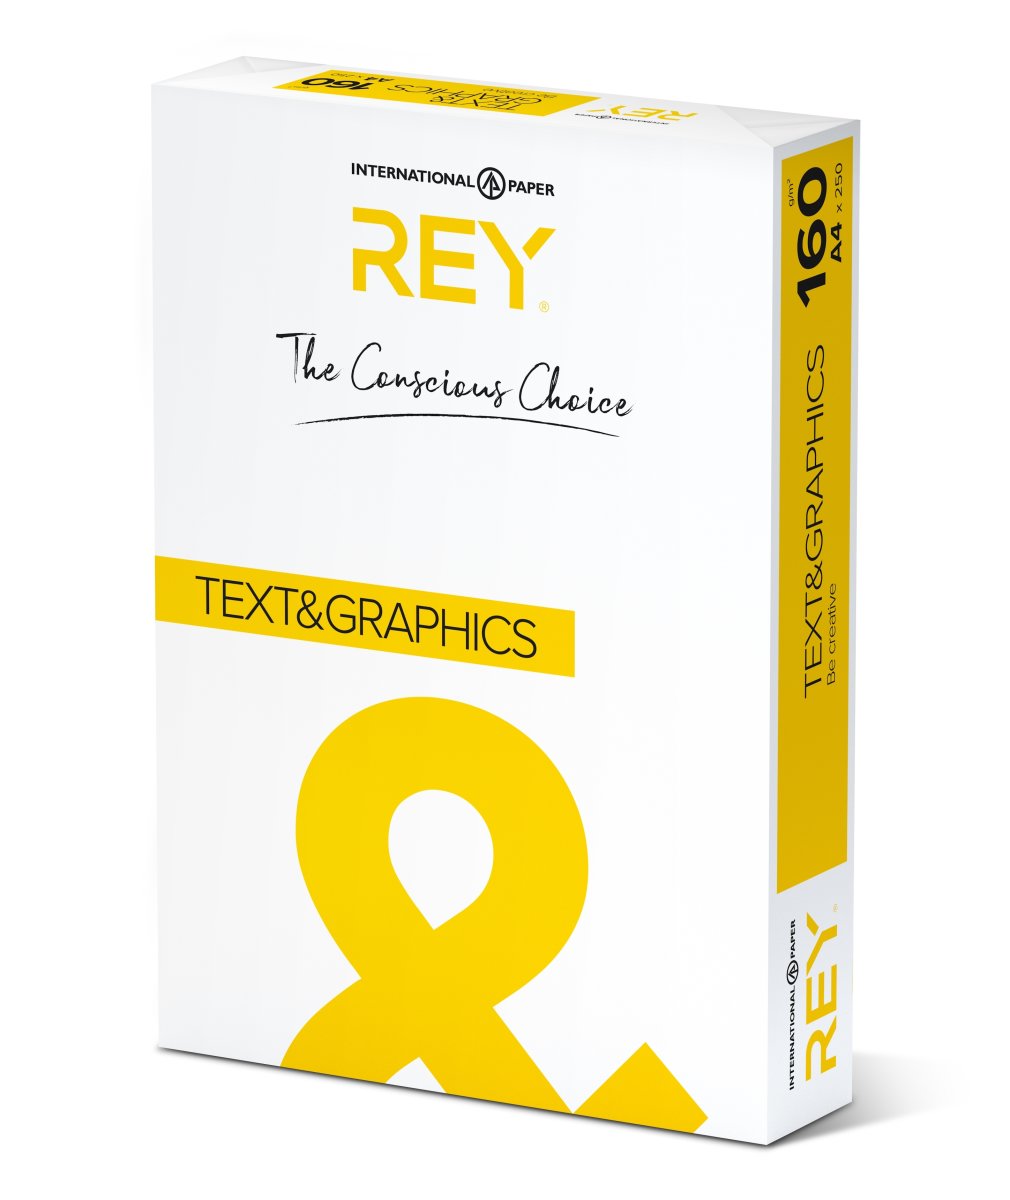 Rey Text & Graphics Kopipapir A4/160g/250ark